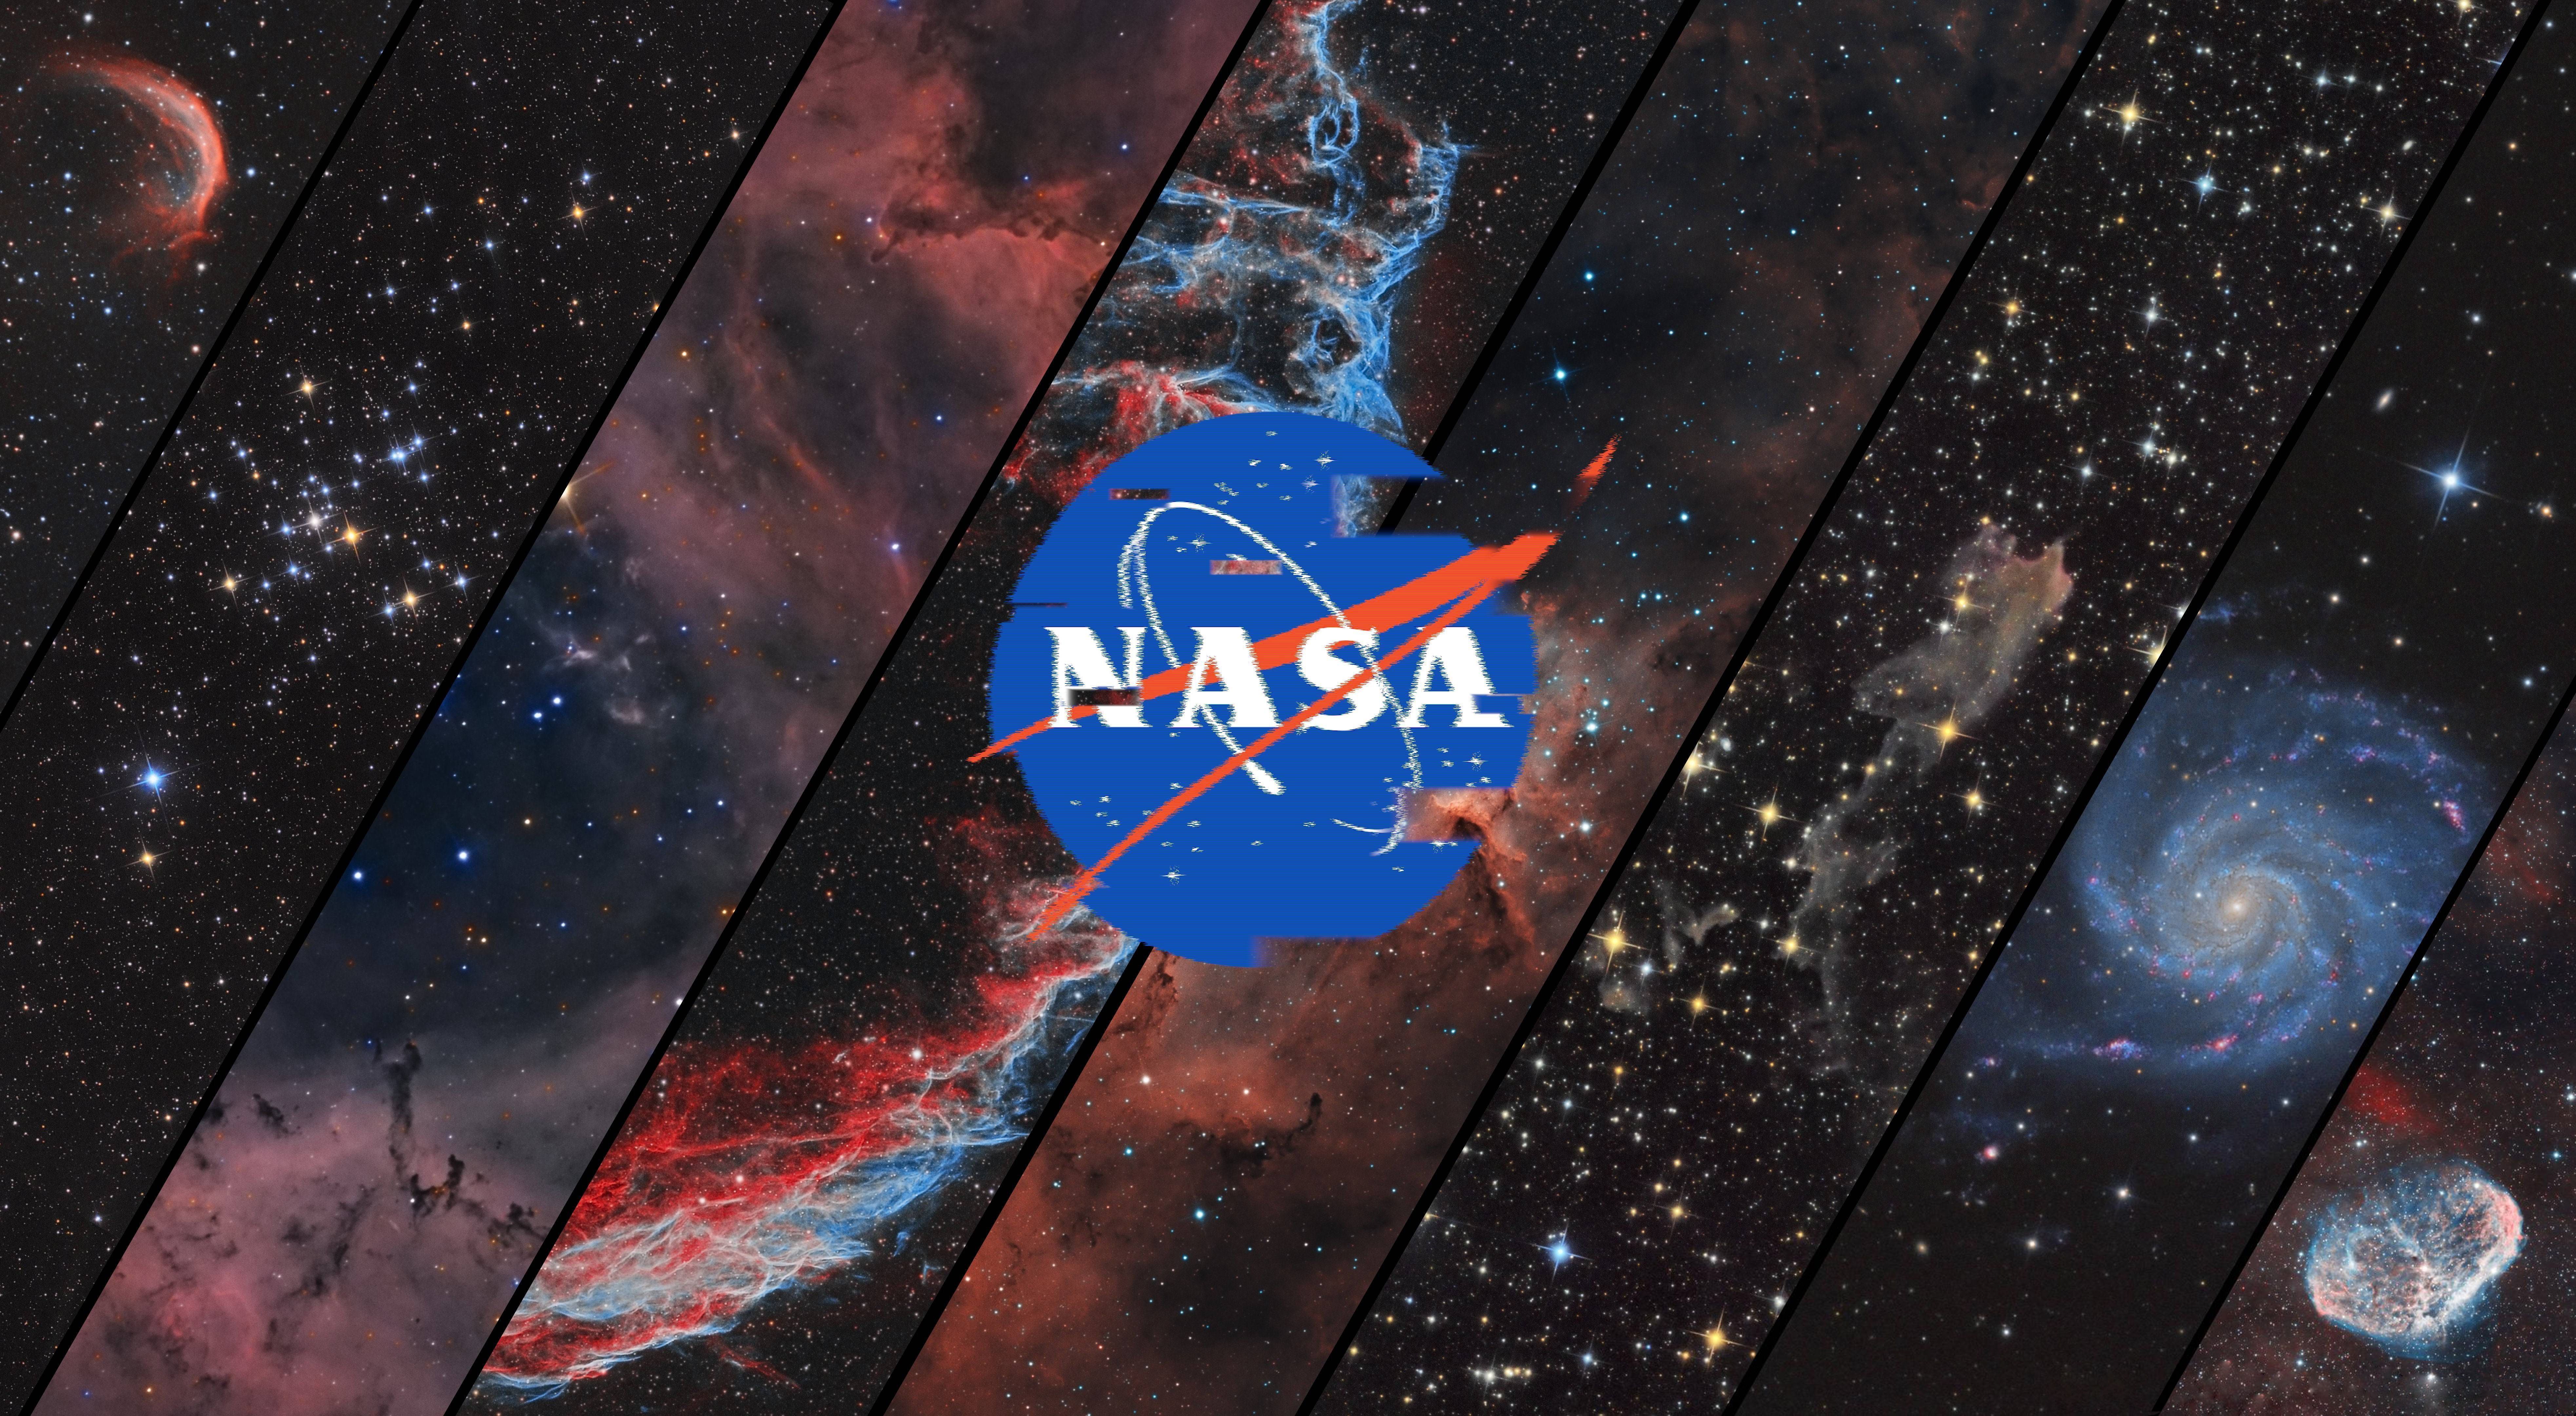 NASA Aesthetic Desktop Wallpaper Free NASA Aesthetic Desktop Background